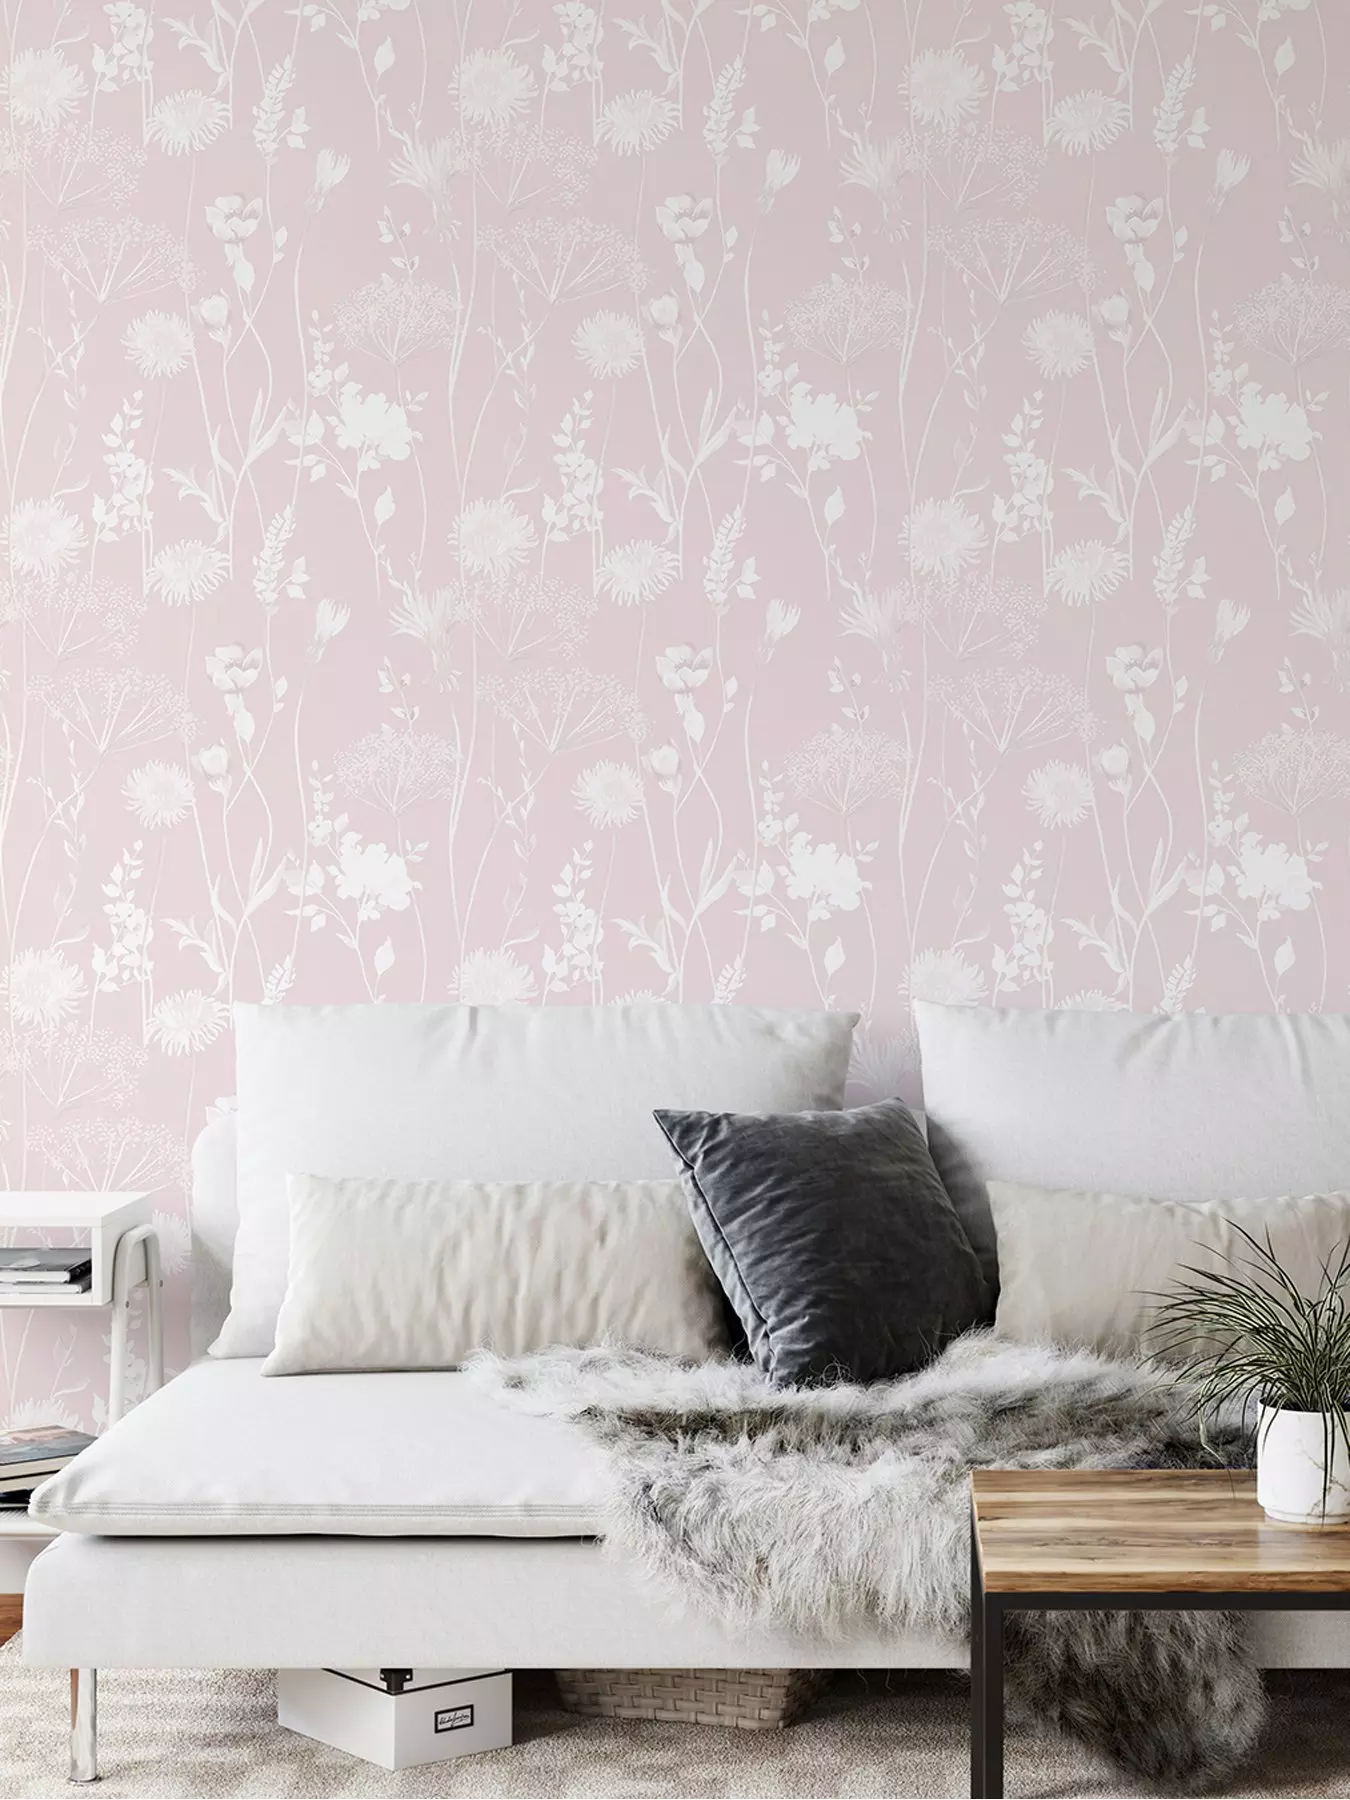 Michael Kors  Iphone background wallpaper, Pink wallpaper iphone, Bling  wallpaper